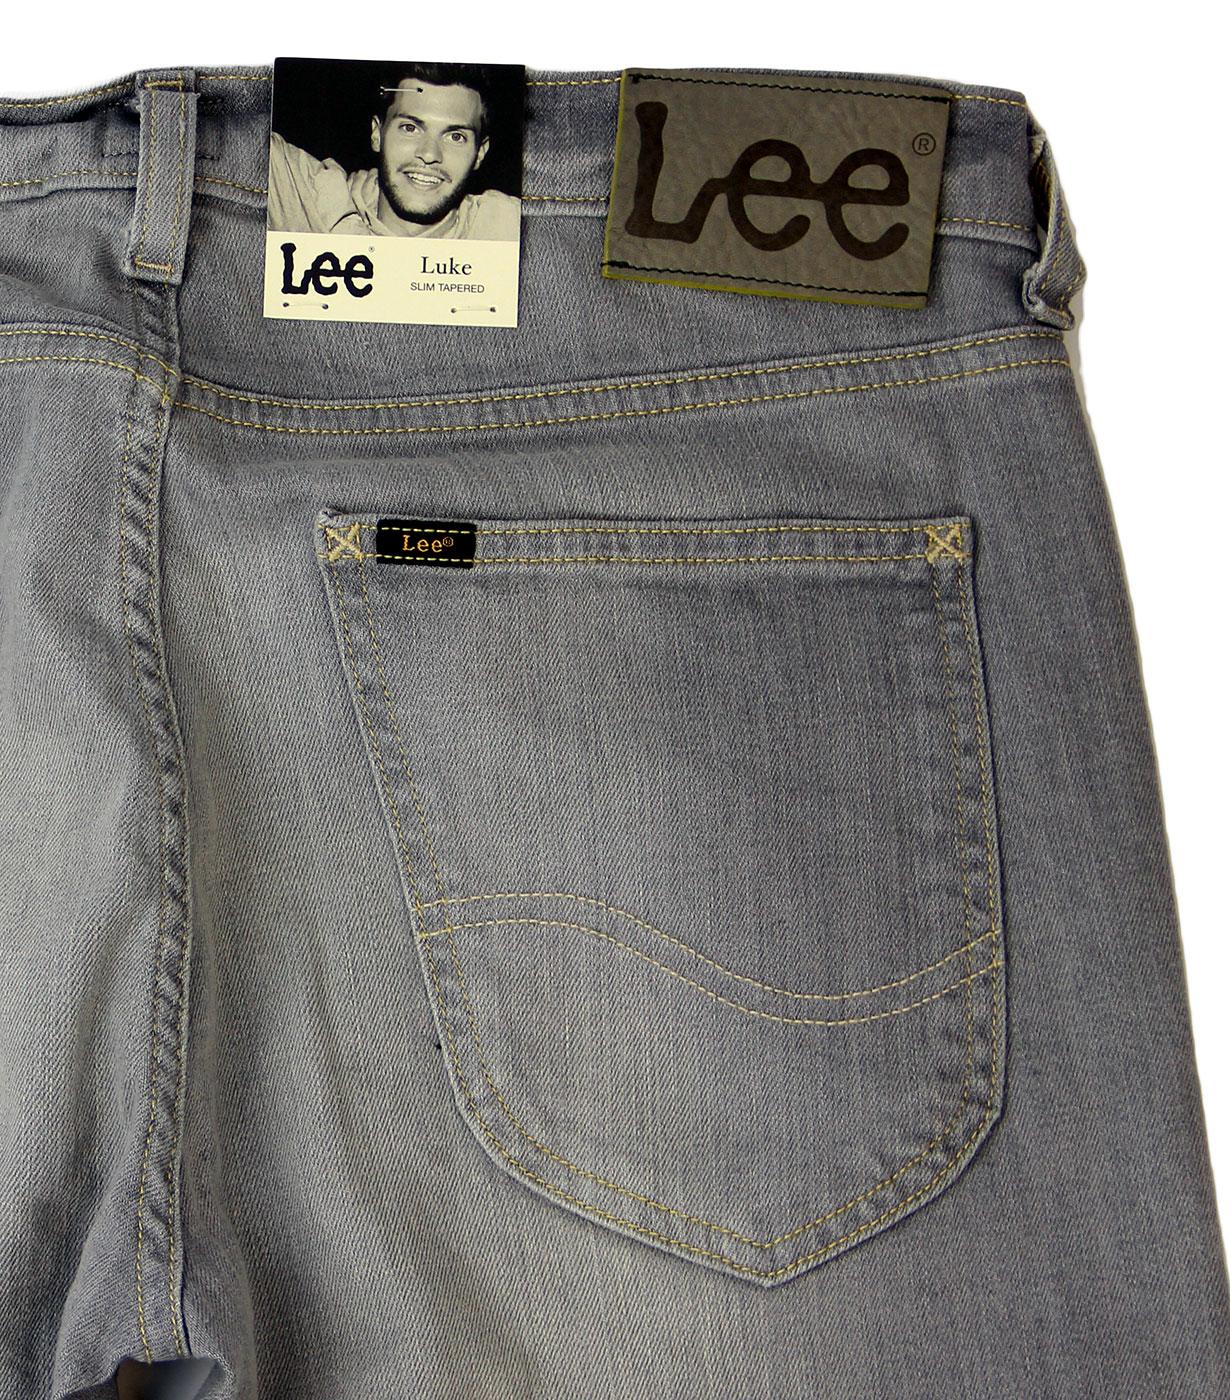 LEE JEANS Luke Retro Indie Mod Slim Tapered Fit Jeans Summer Ash